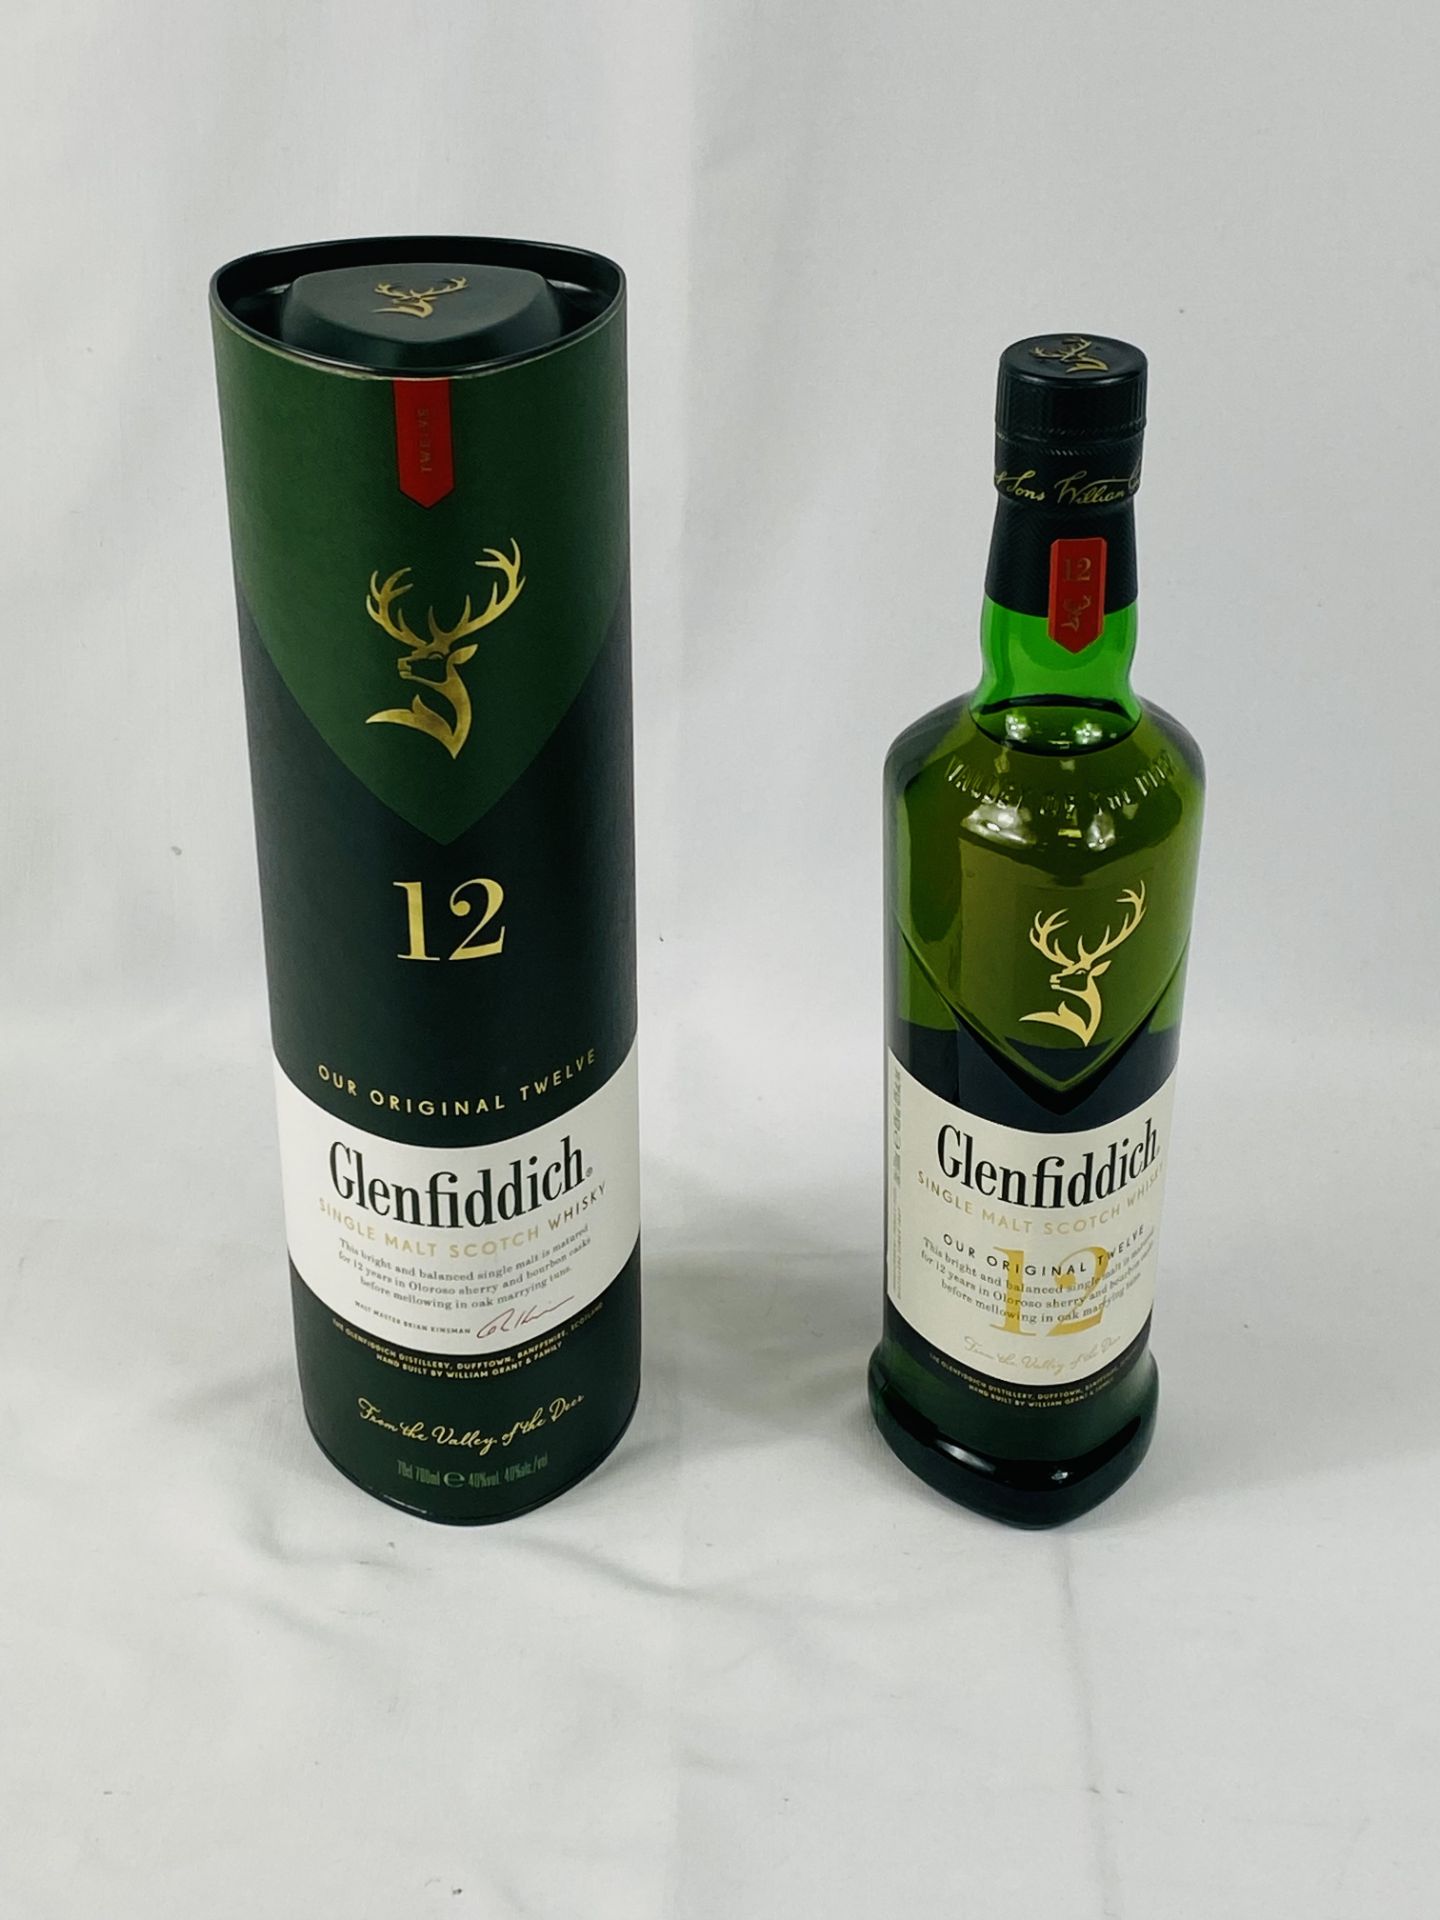 70cl bottle of Glenfiddich single malt Scotch whisky in presentation box - Image 2 of 2